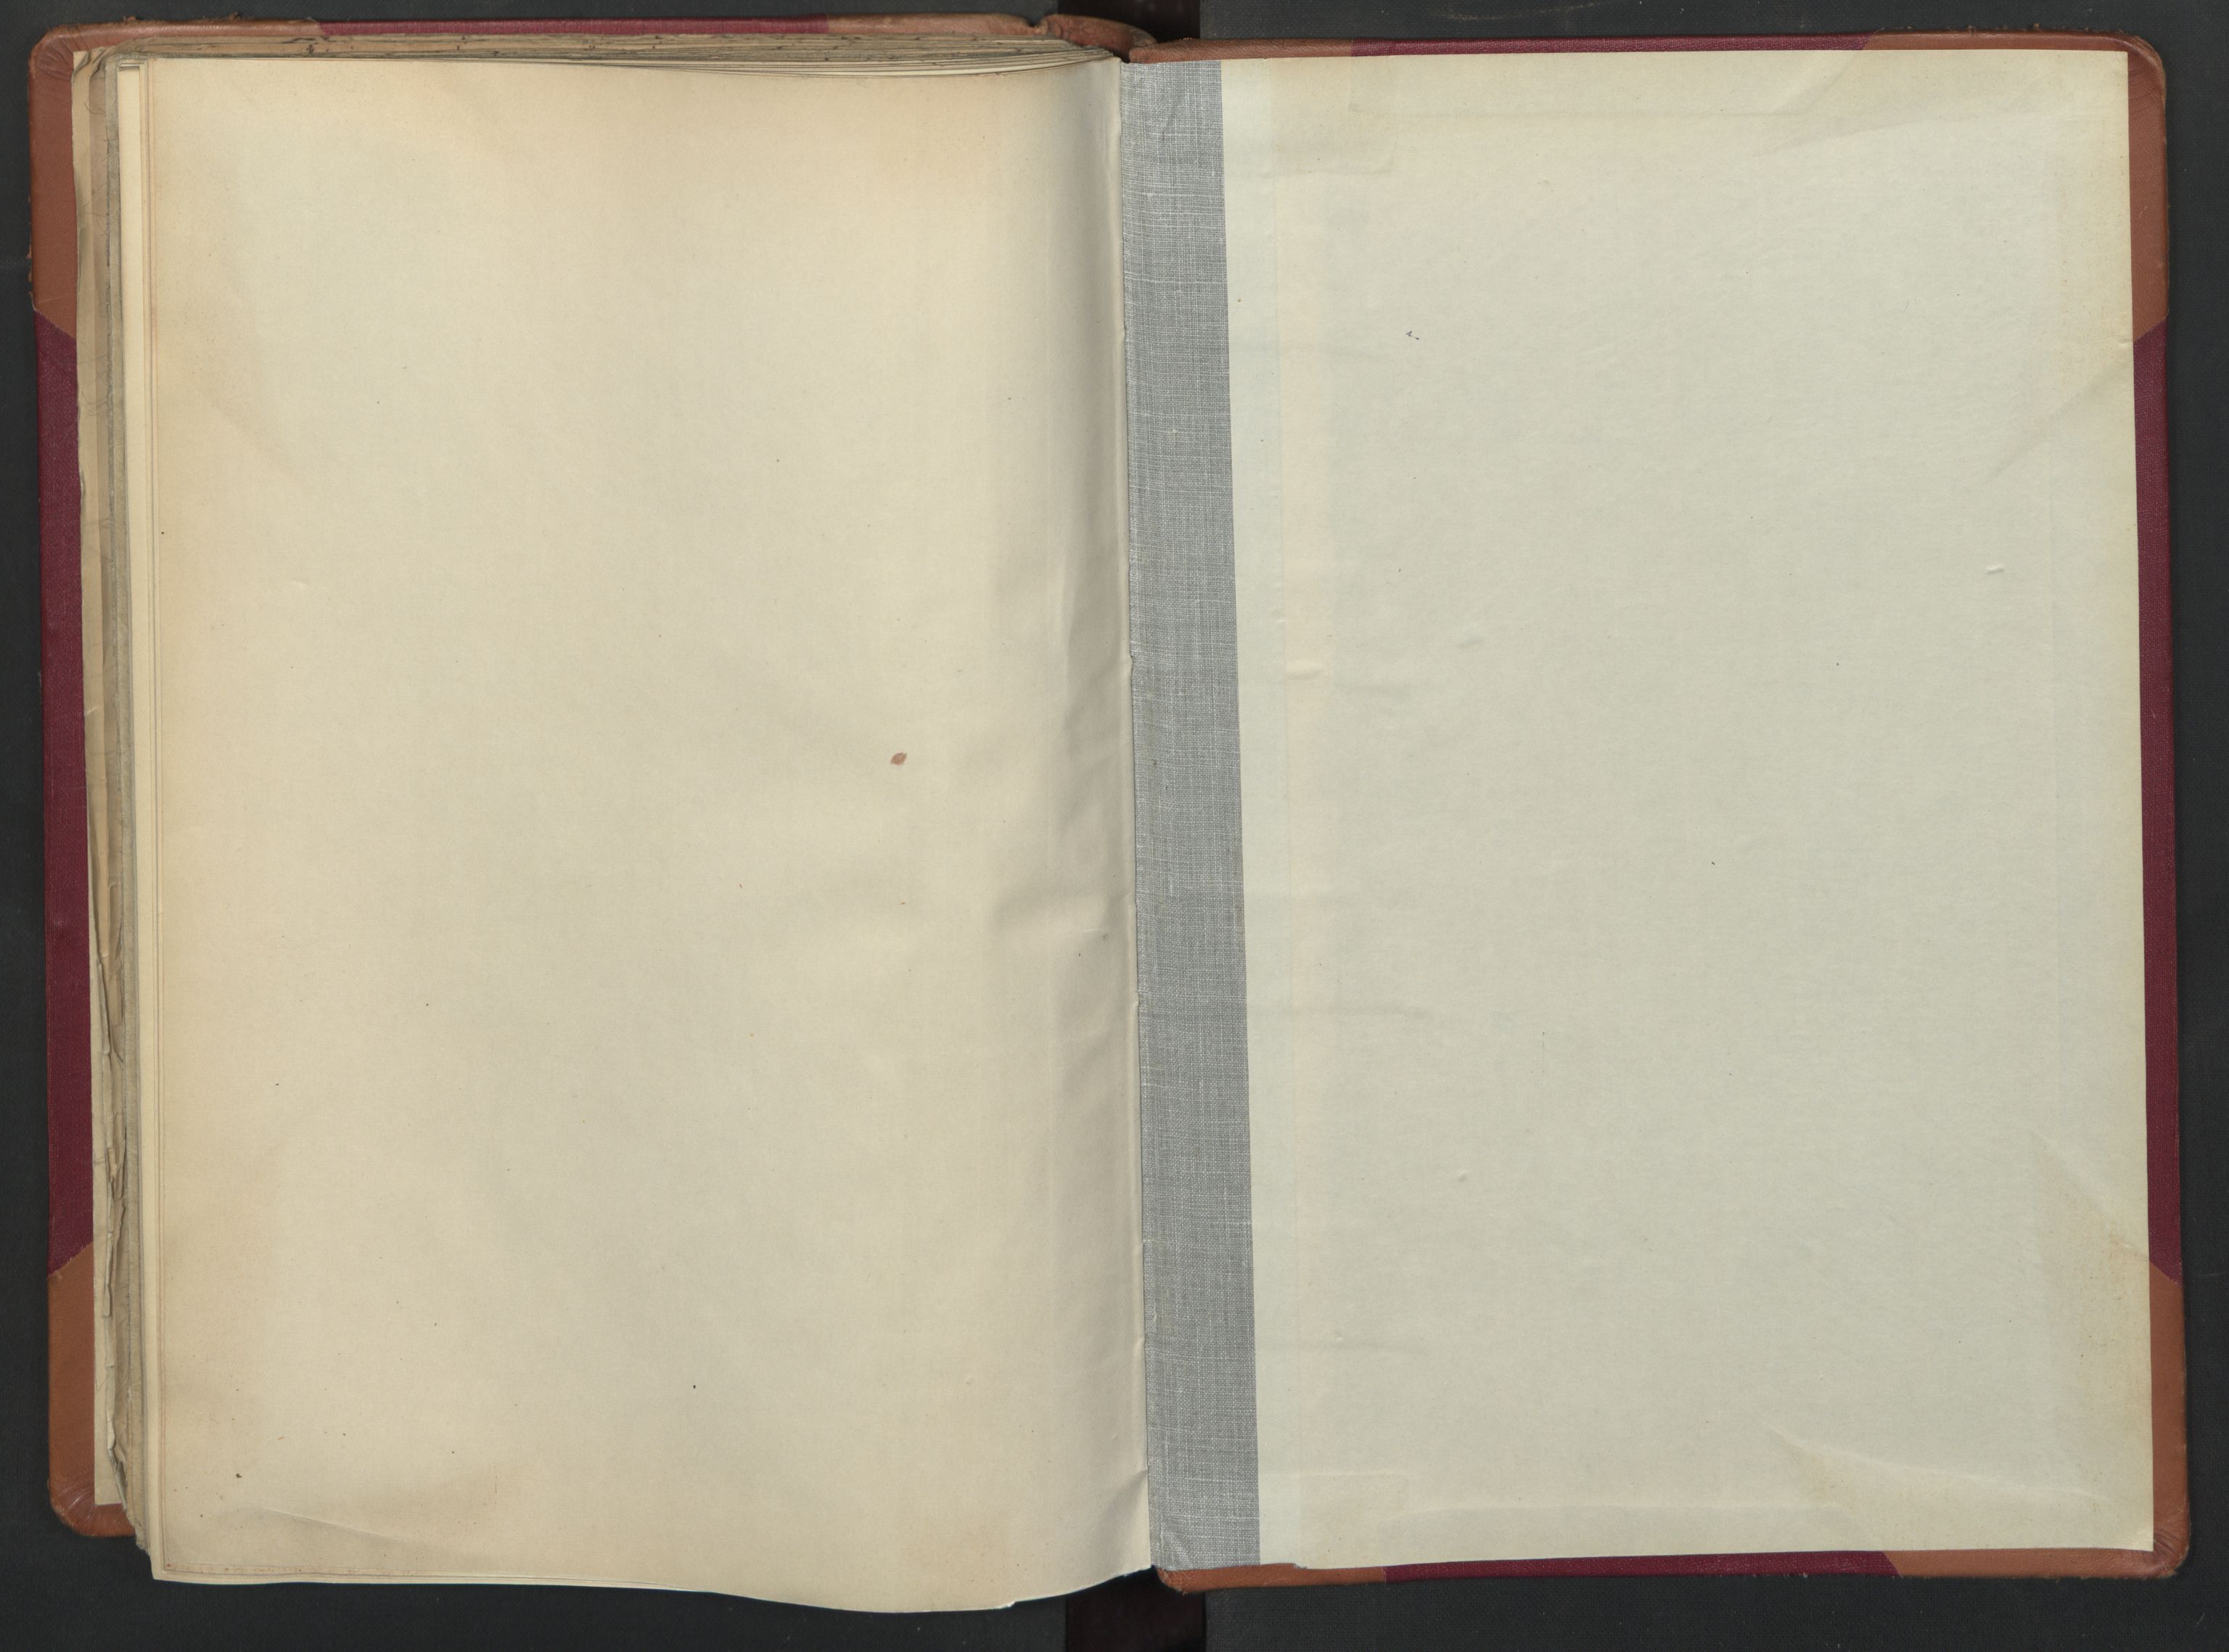 RA, Manntallet 1701, nr. 18: Vesterålen, Andenes og Lofoten fogderi, 1701